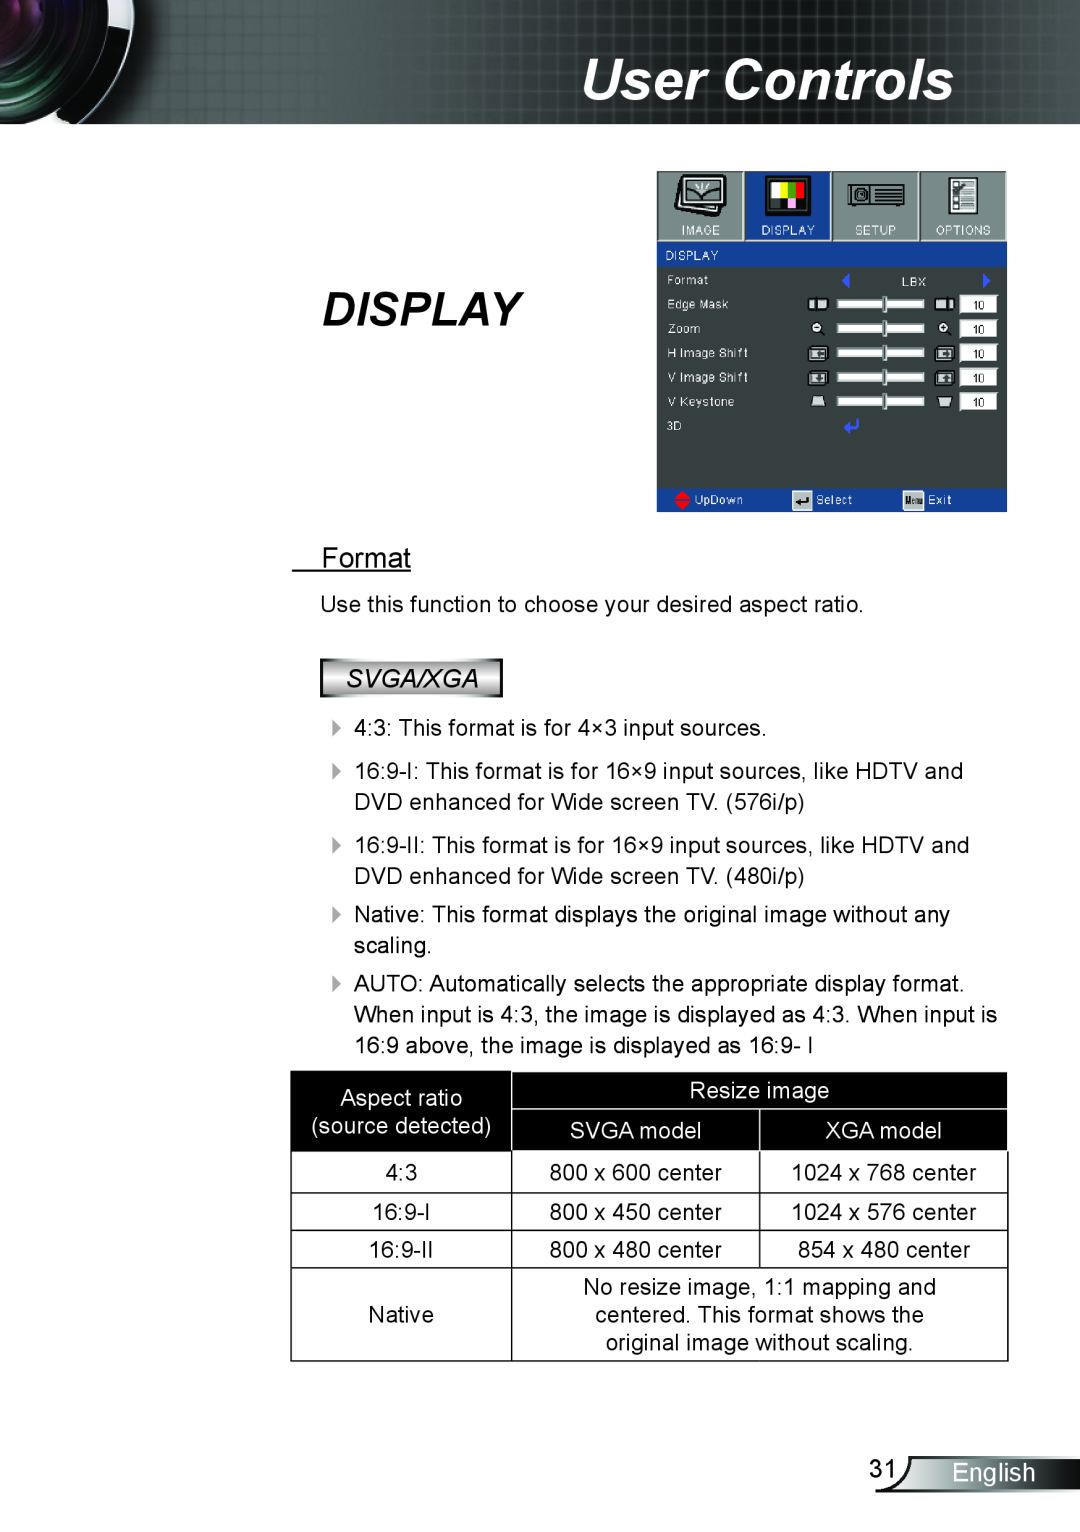 Optoma Technology DS339, TW5563D Display, Format, English, User Controls, Svga/Xga, Aspect ratio, Resize image, SVGA model 